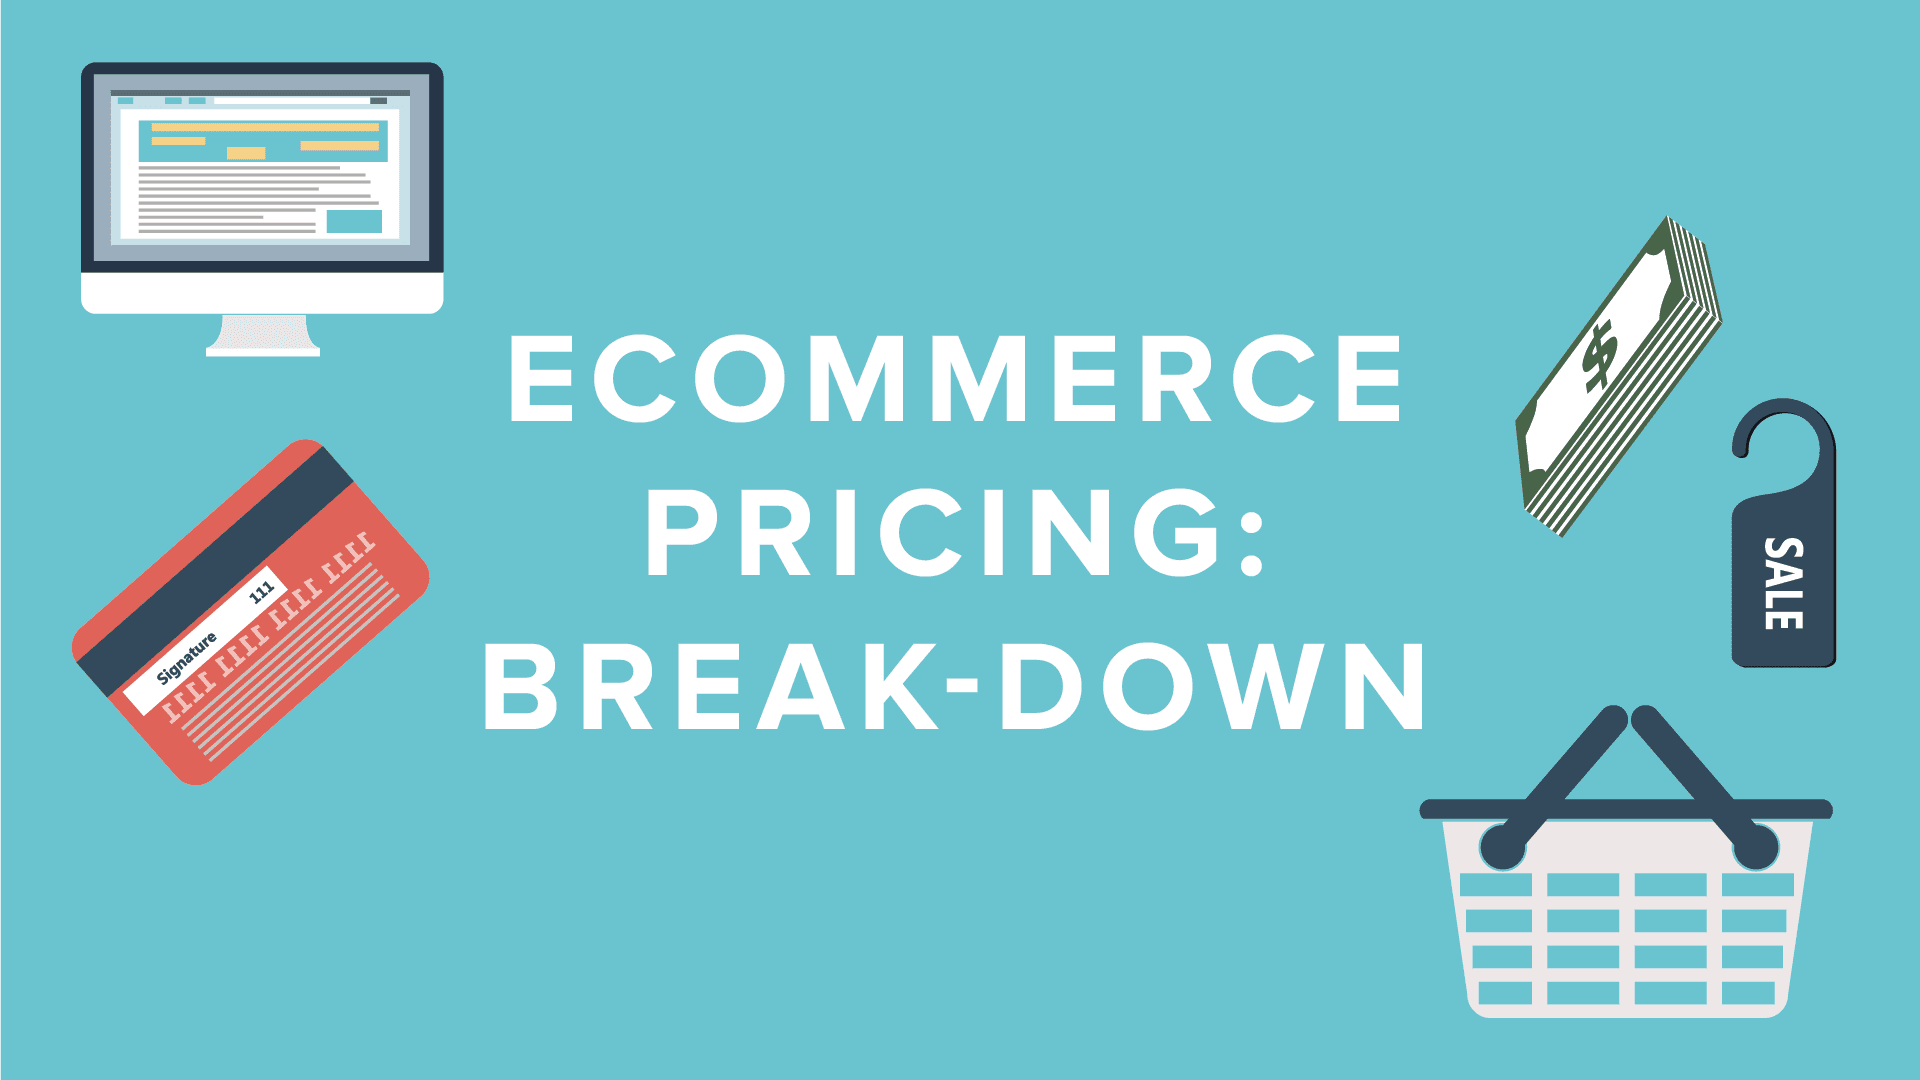 DigitalChalk: eCommerce Accounts and Pricing: A Break-Down